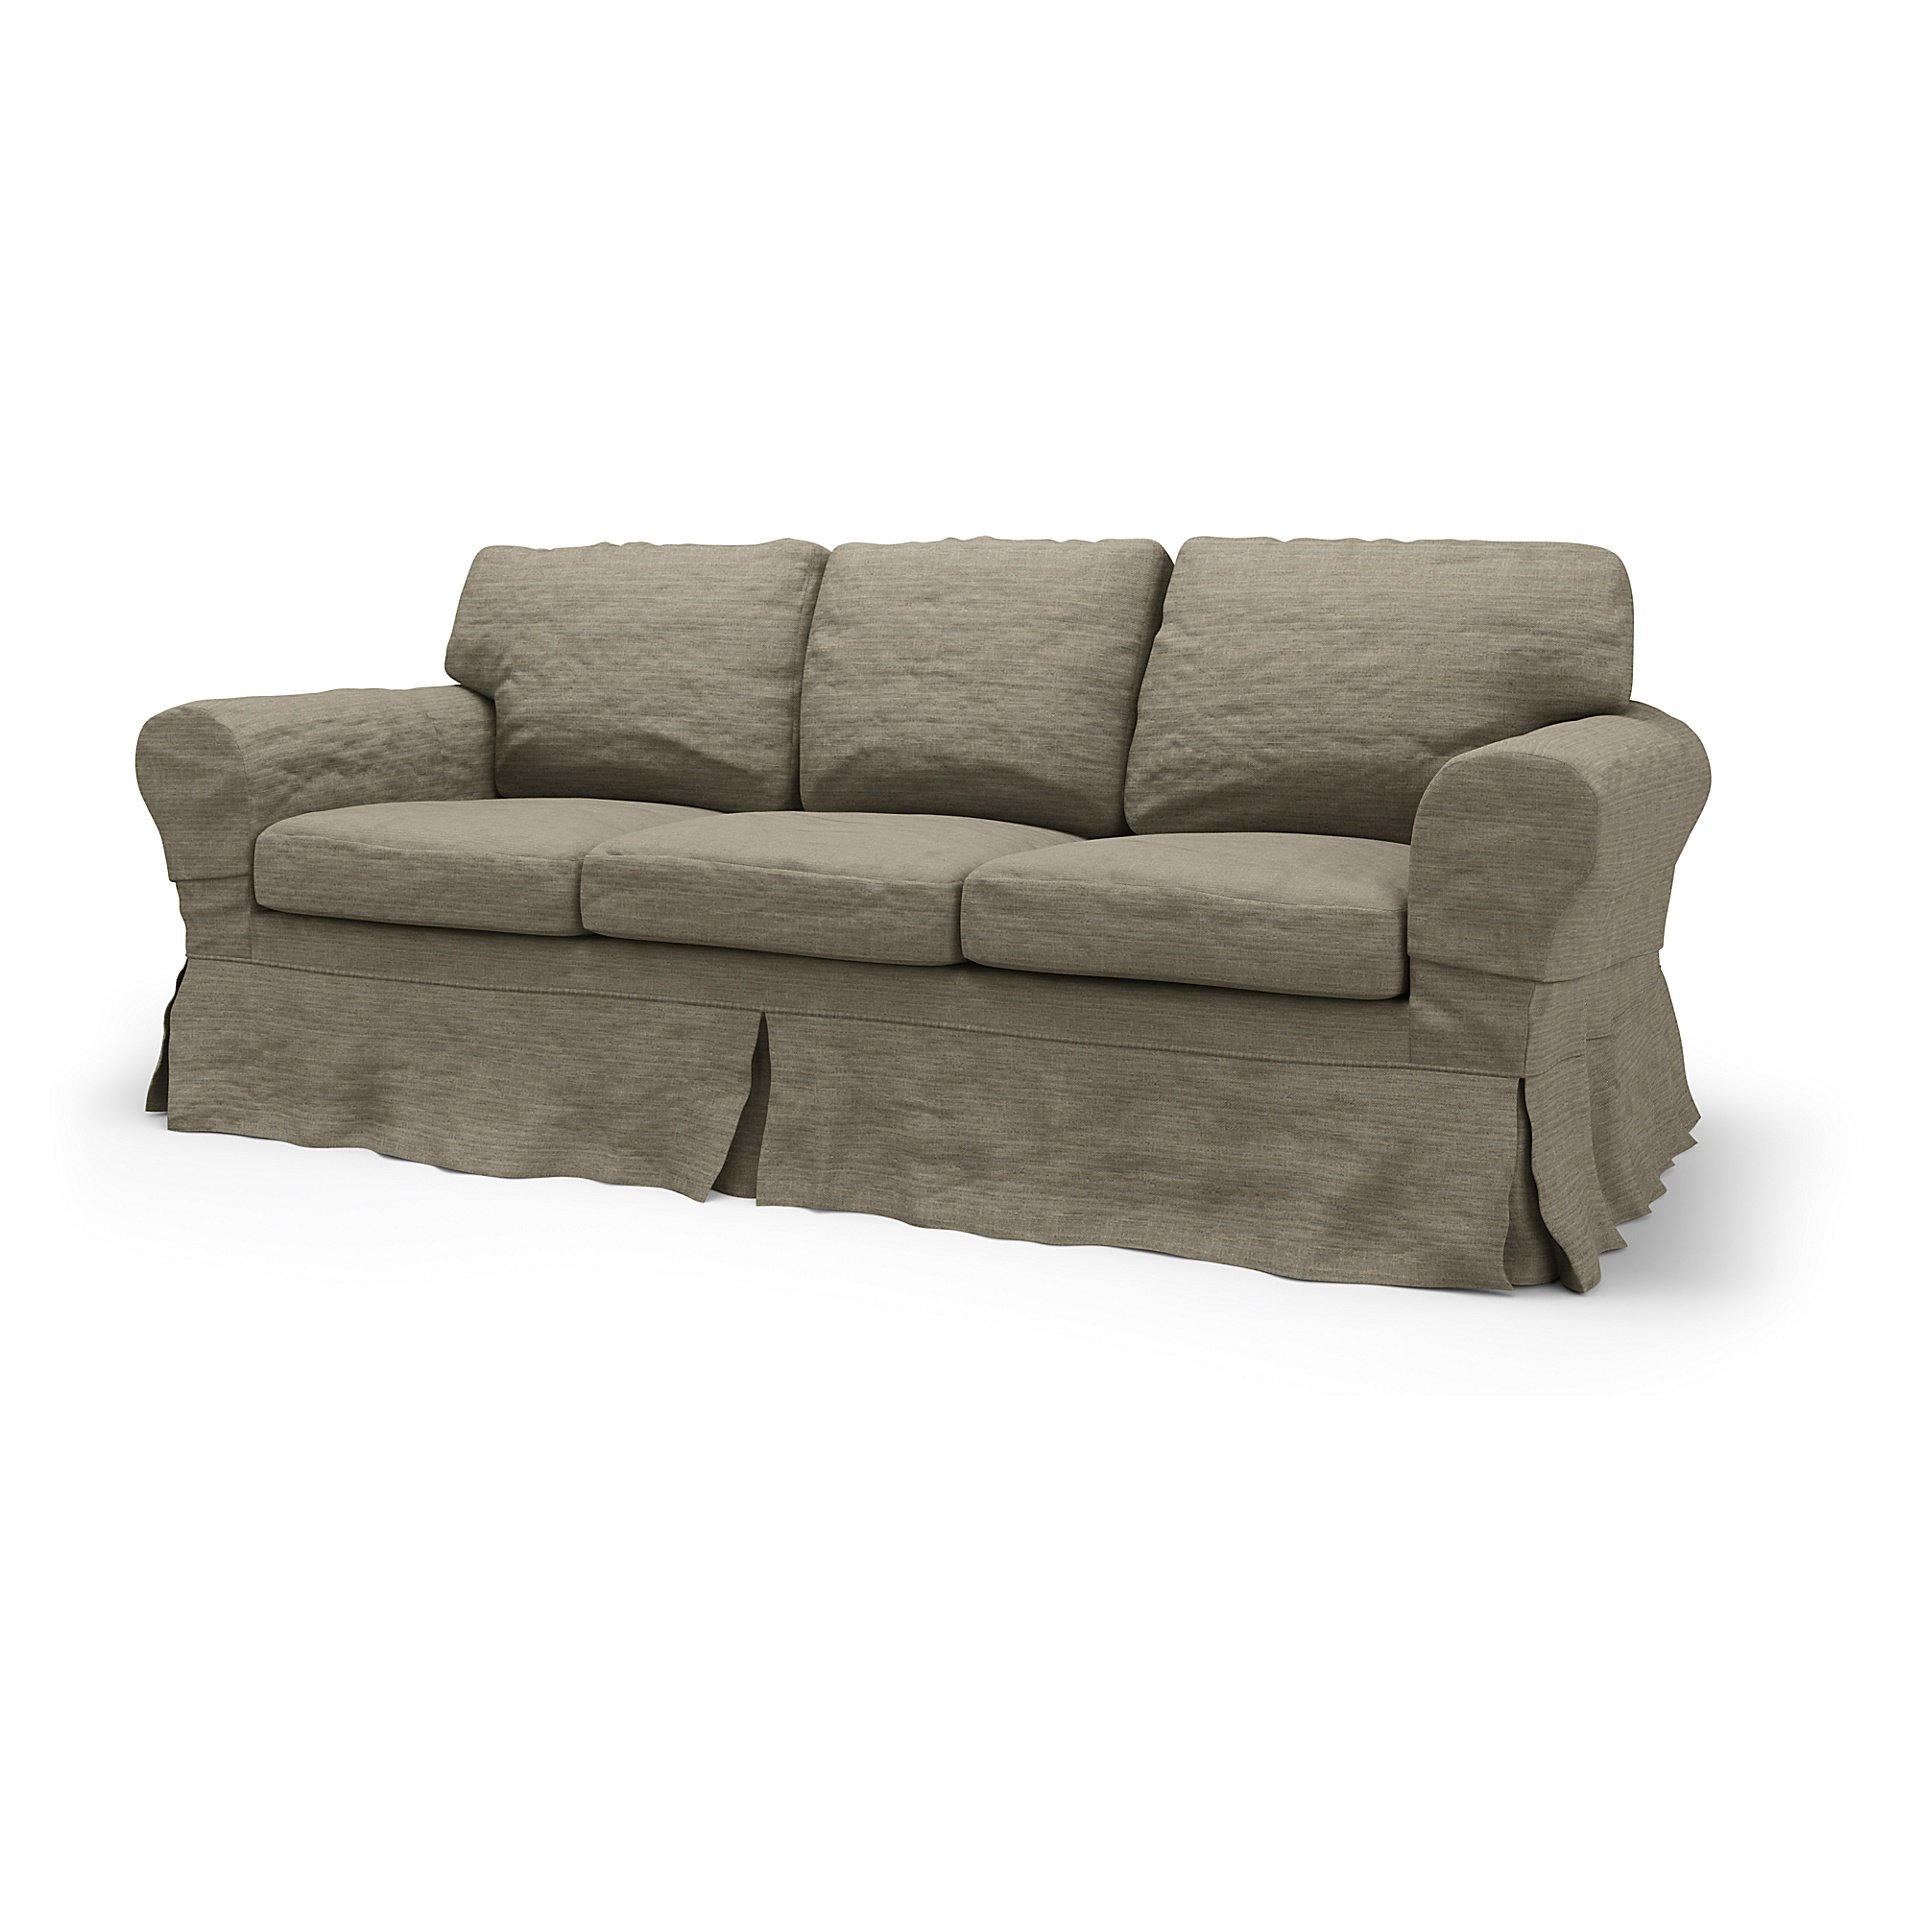 IKEA - Ektorp 3 Seater Sofa Bed Cover, Mole Brown, Boucle & Texture - Bemz